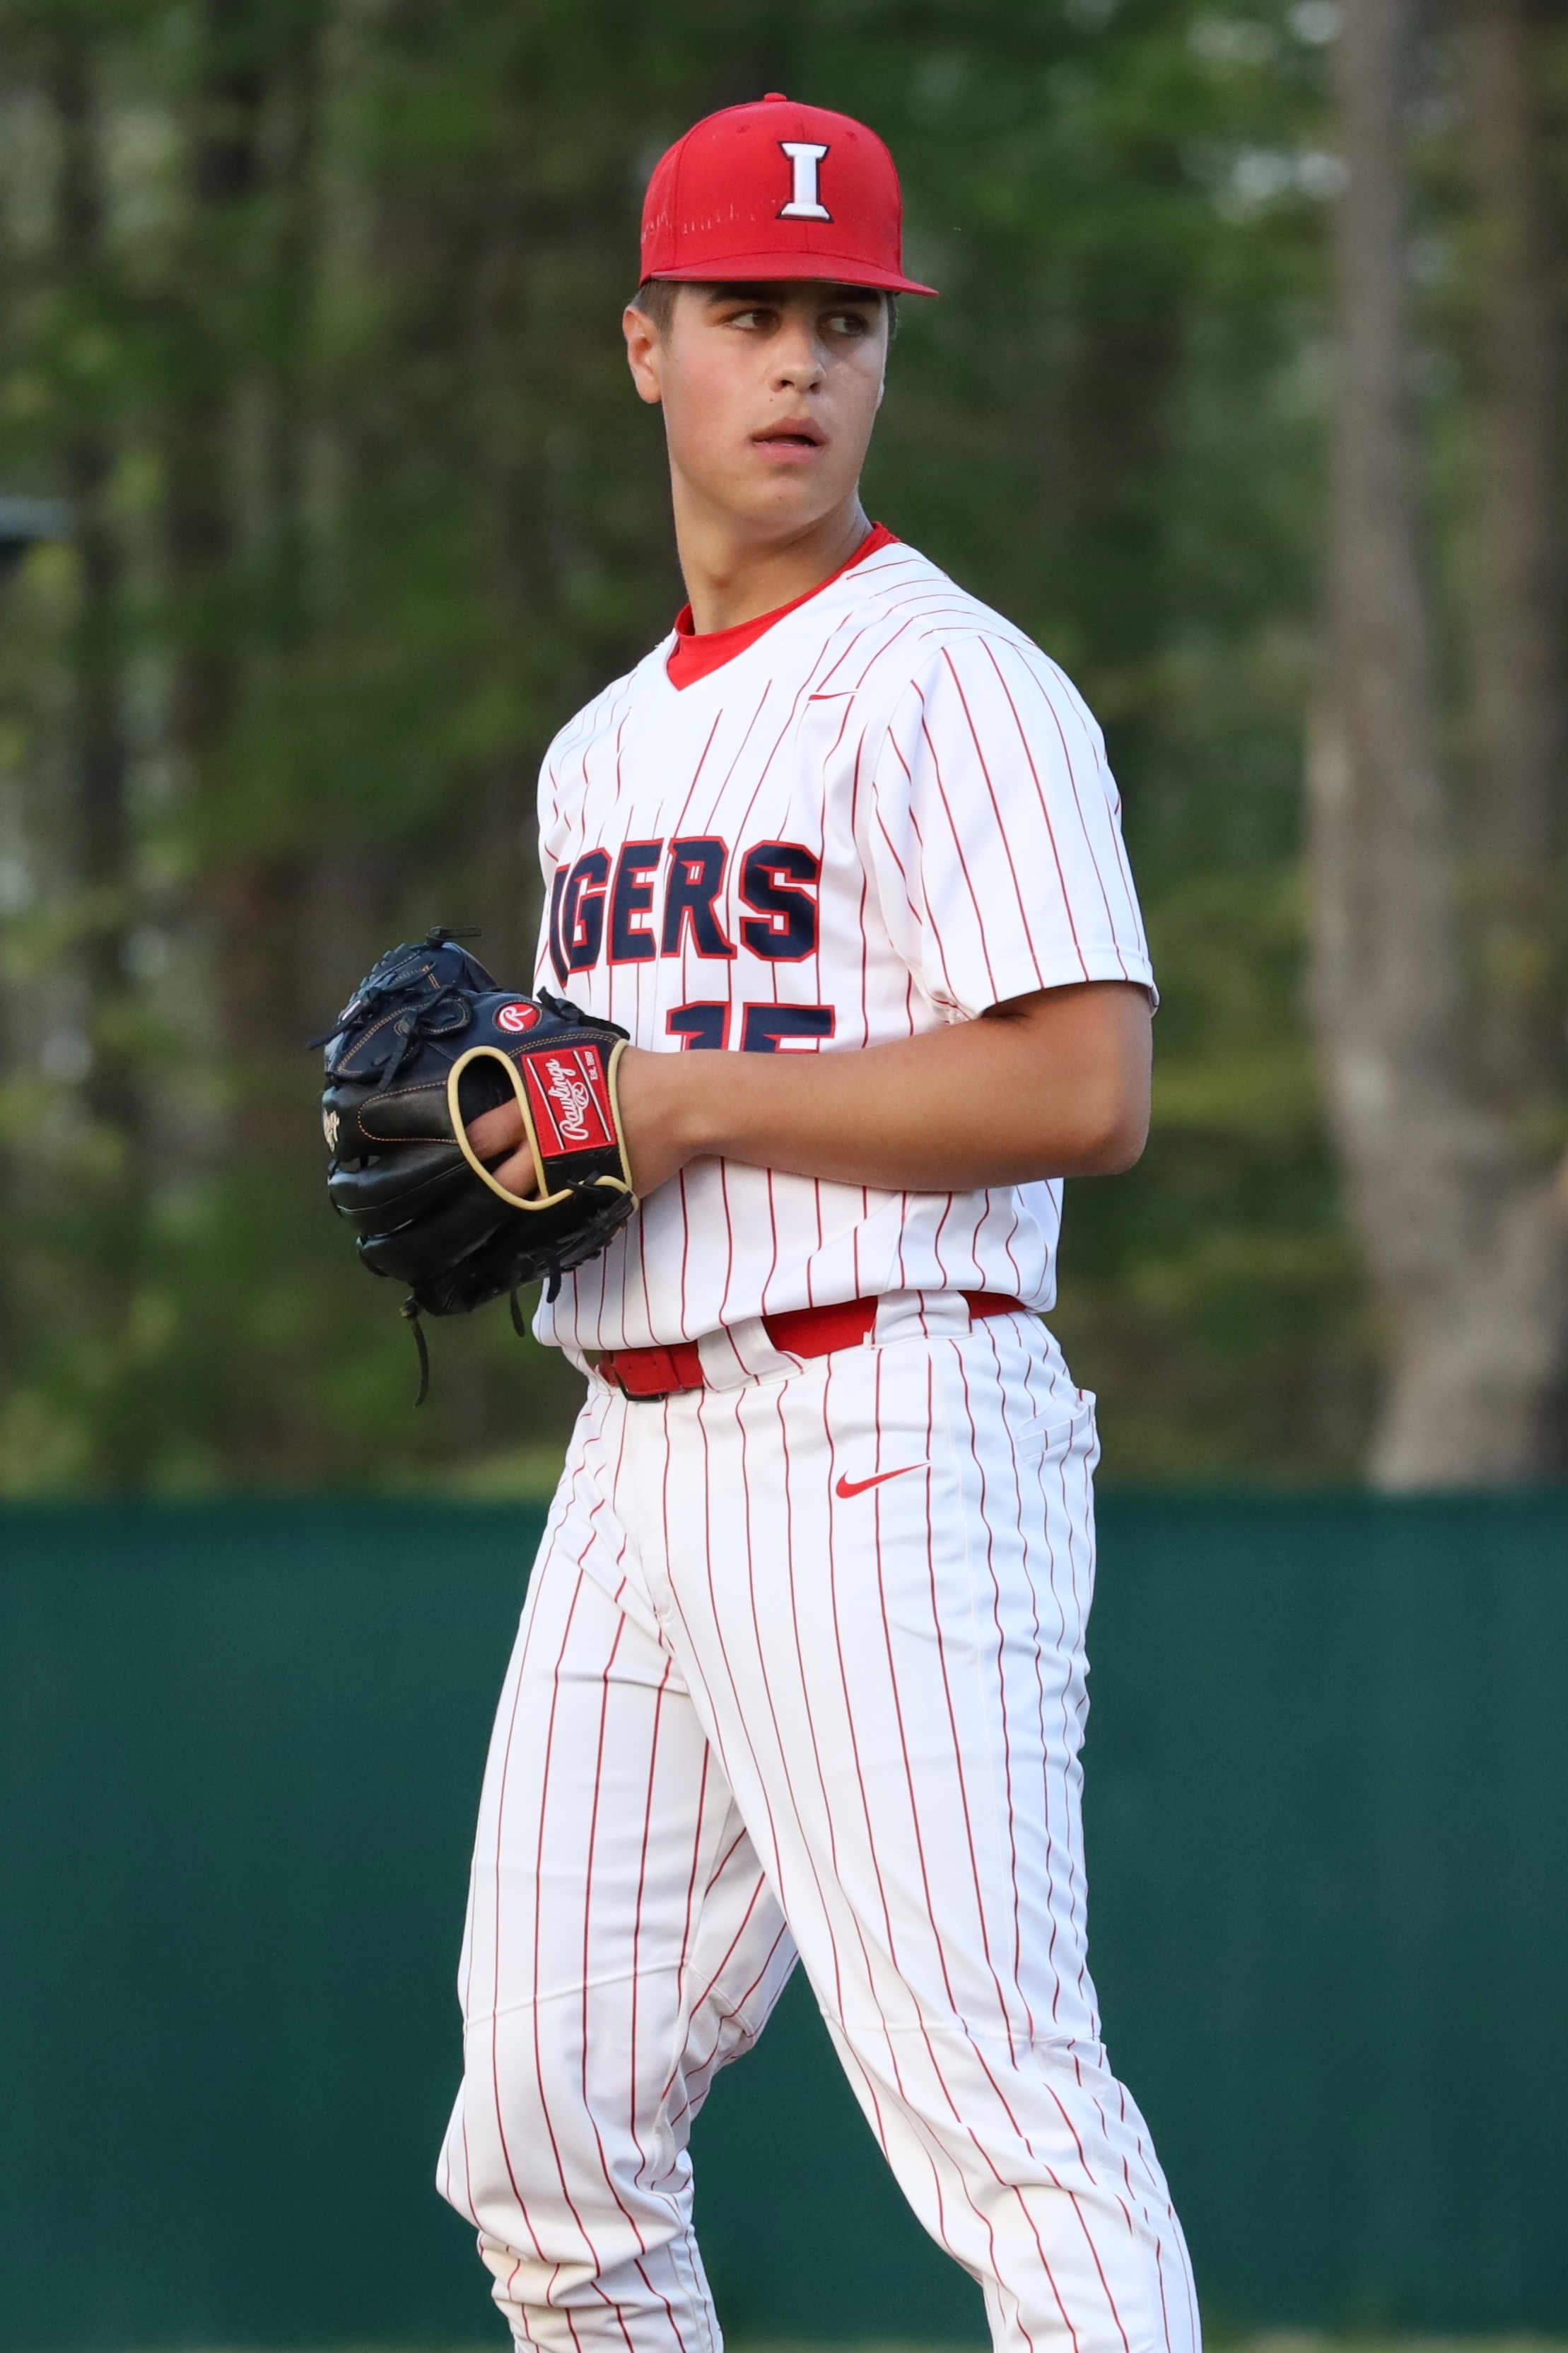 Ben Ross Player Profile Virginia Baseball Tourneys